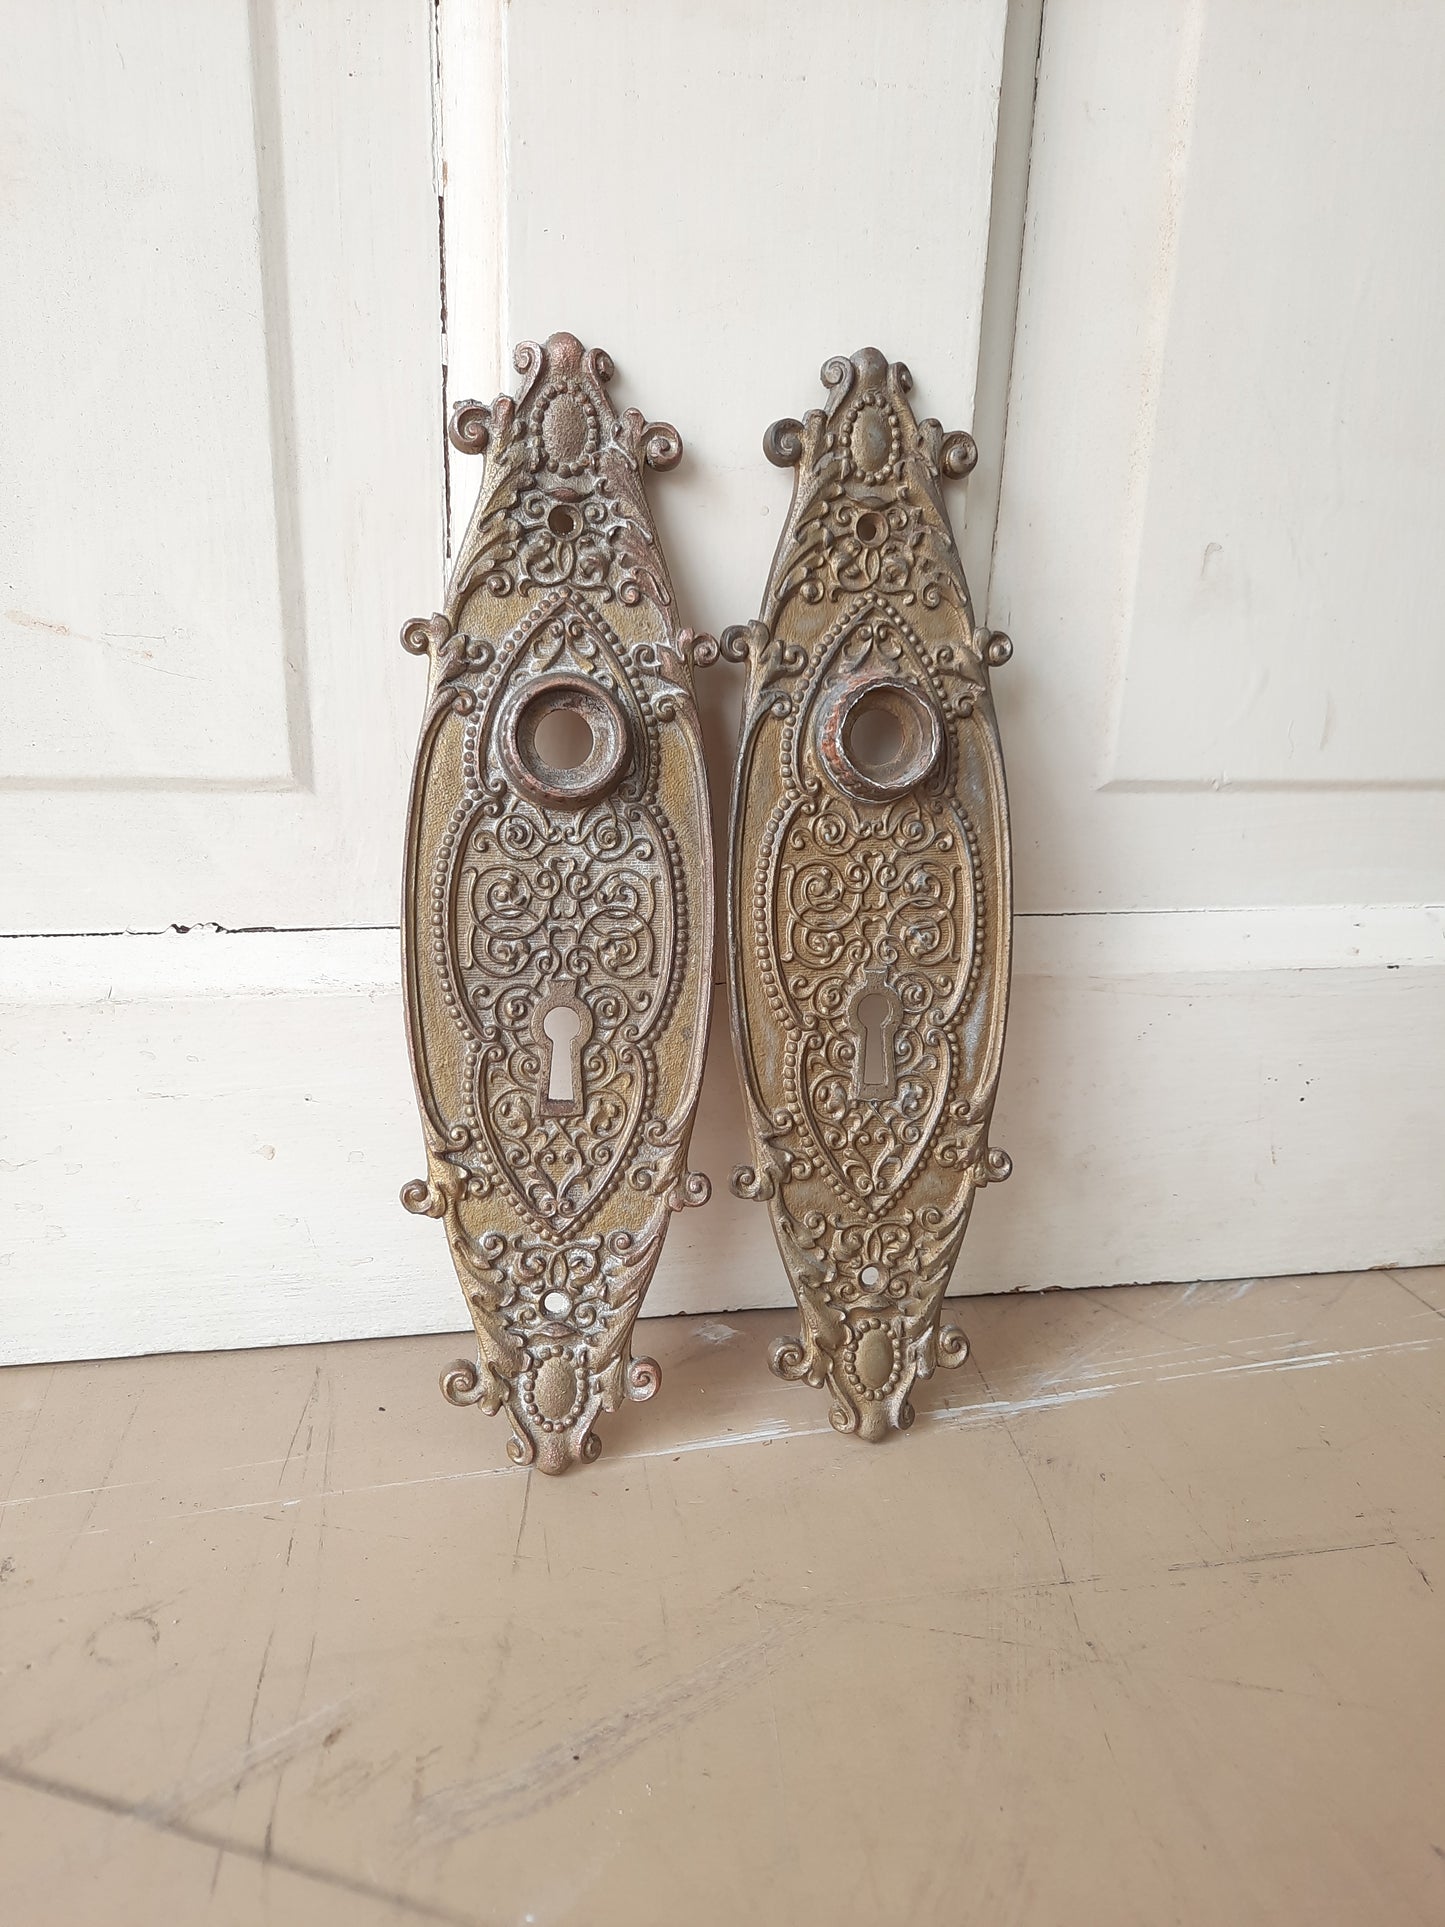 Pair Ornate Iron Backplates with Floral Design, Ornate Antique Doorknob Escutcheons